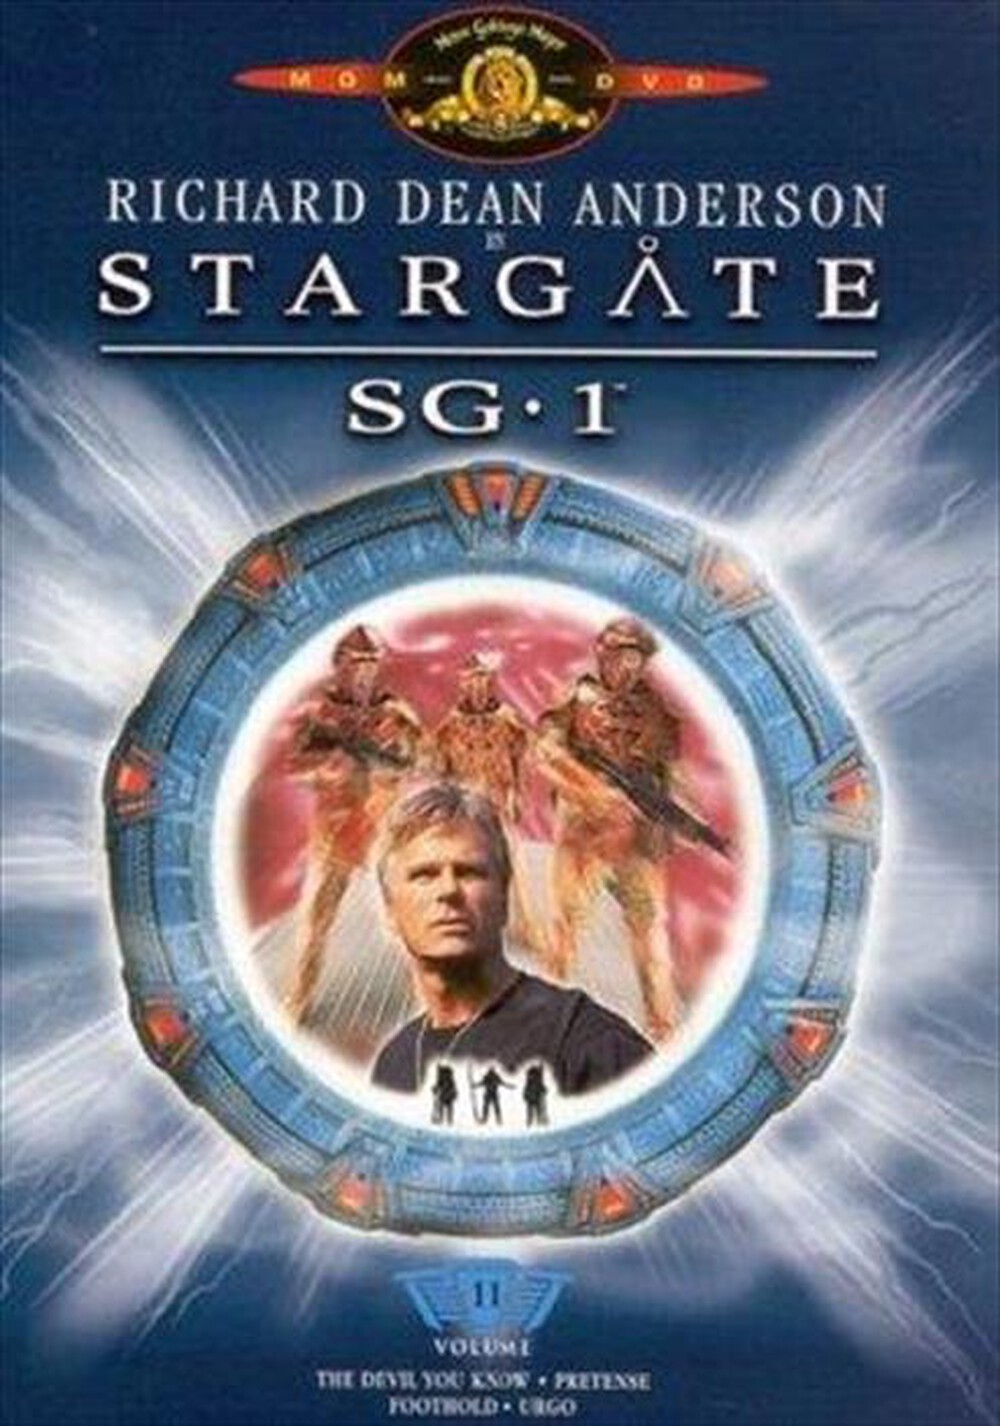 "Mgm - Stargate Sg.3  Vol.11"